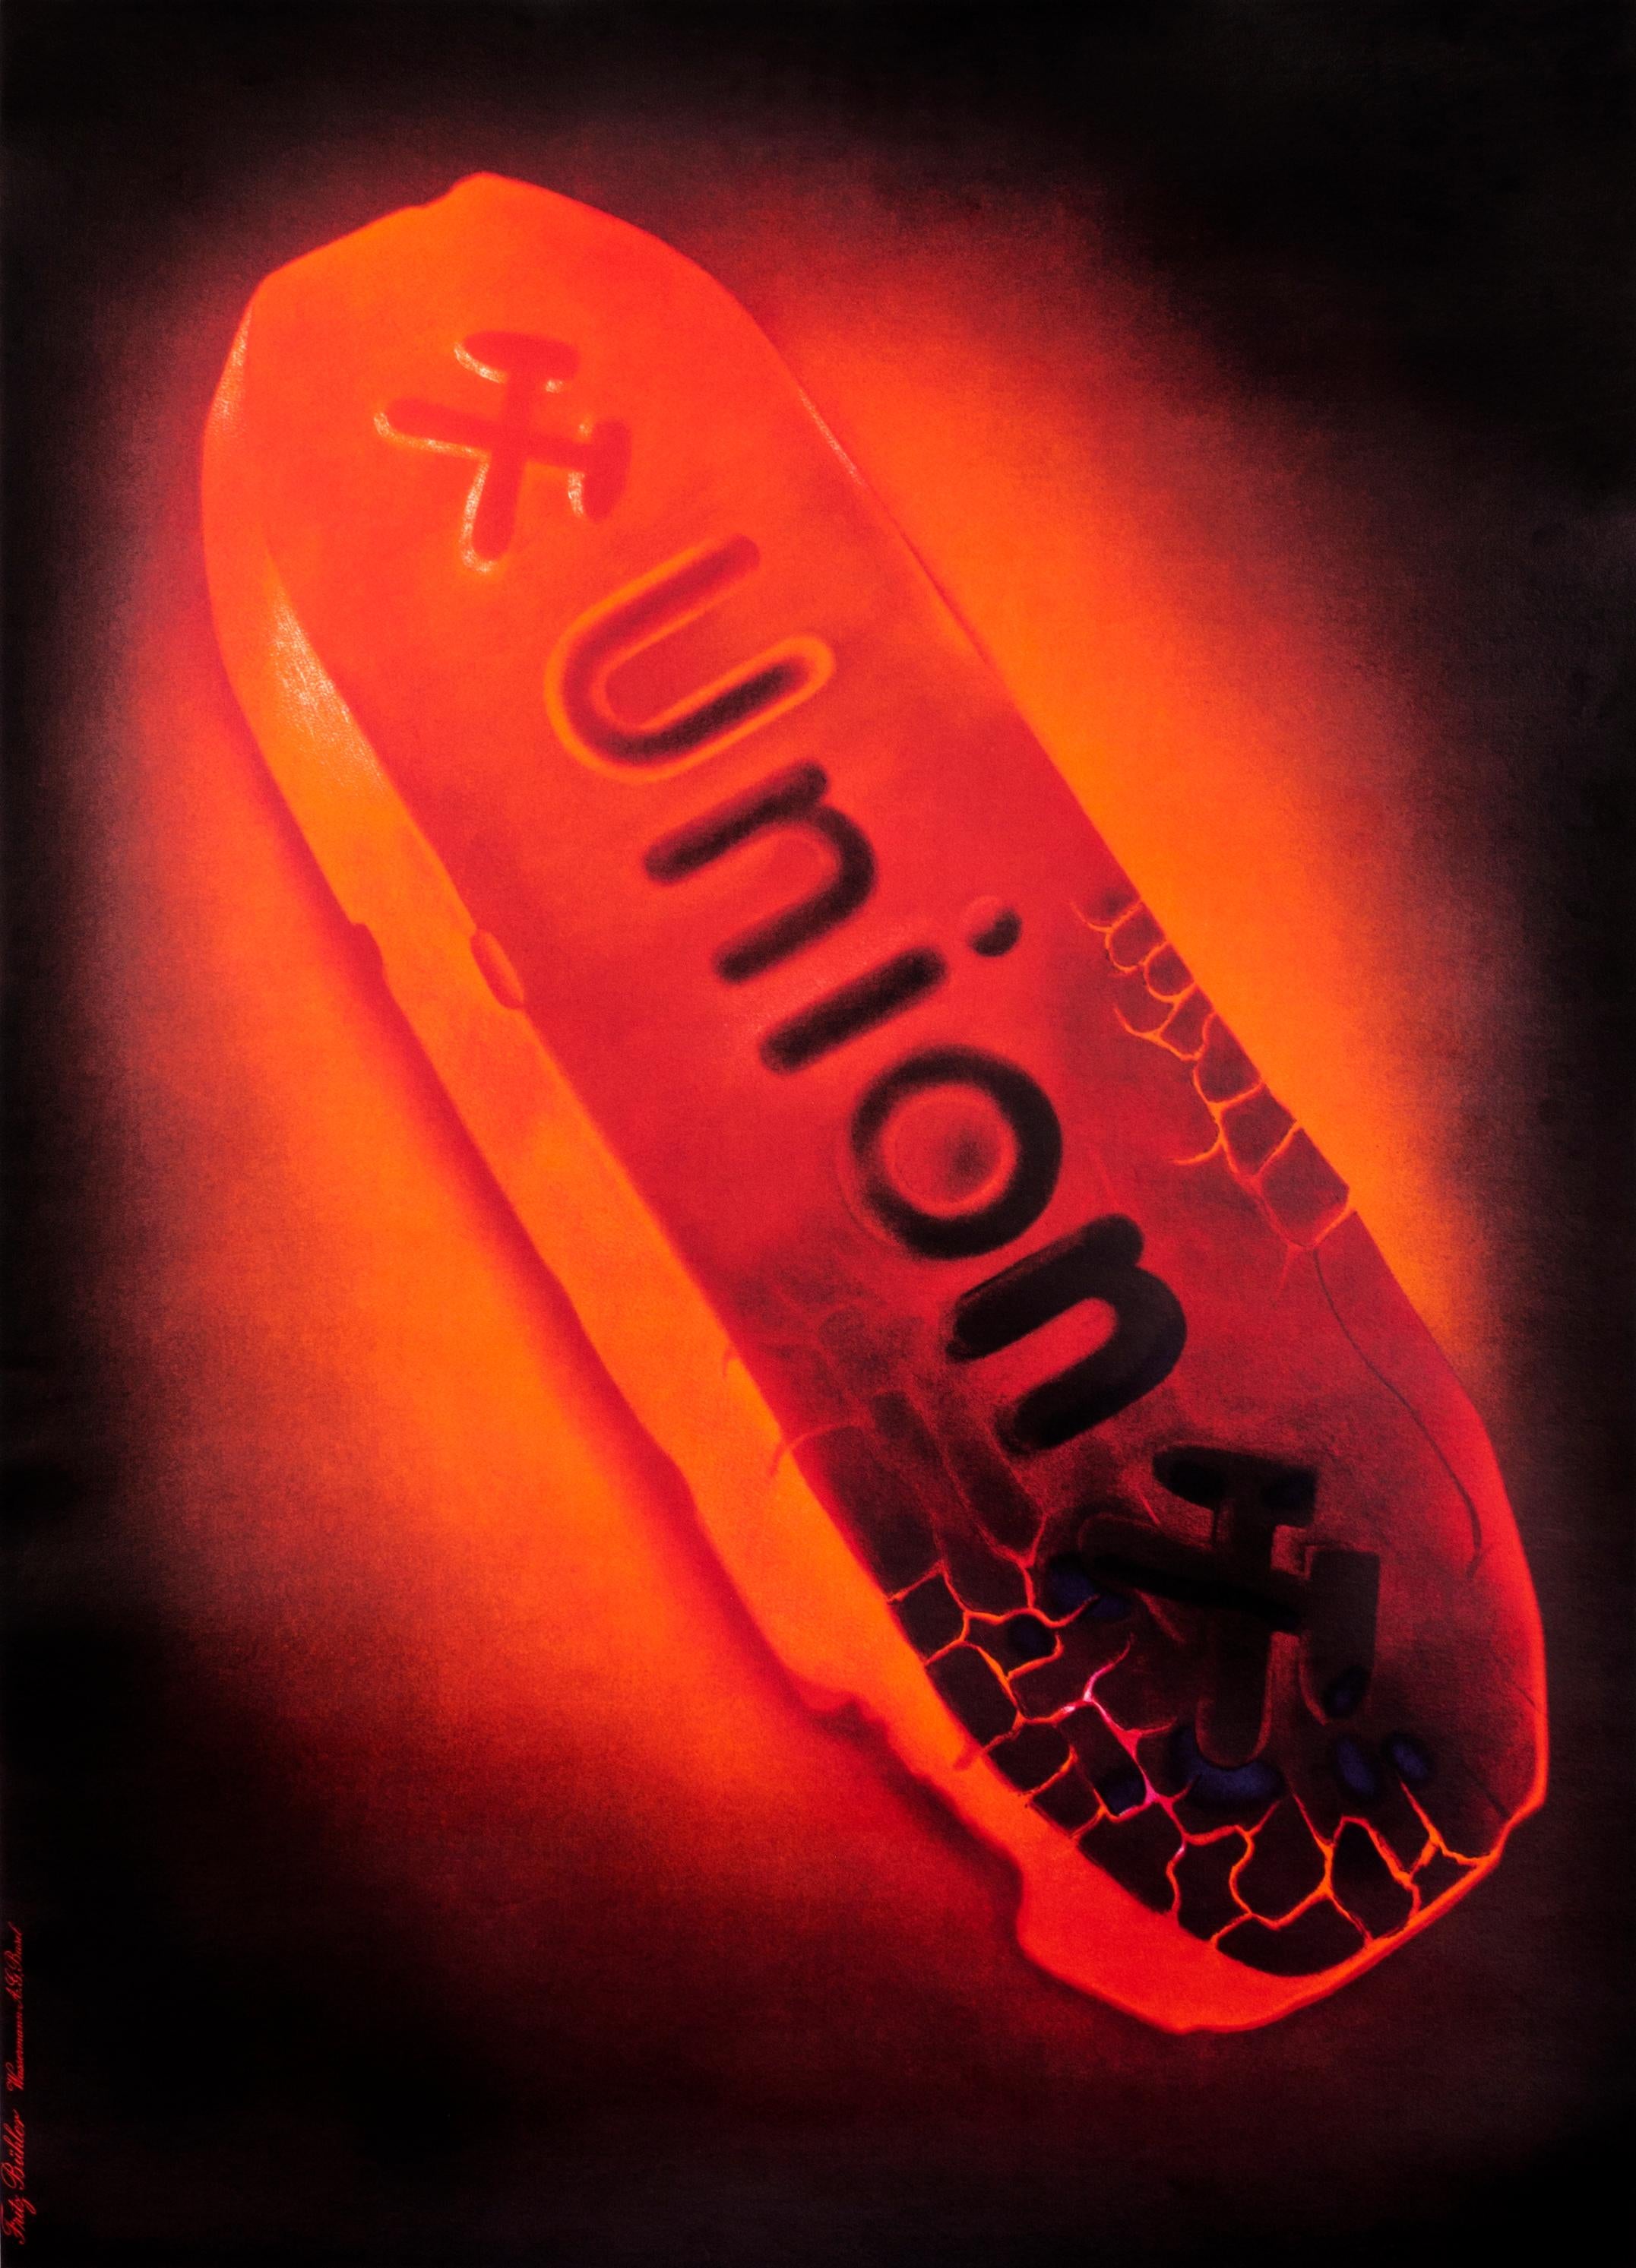 "Union" Original Vintage Hyper-Realistic Product Poster 1940s - Print by Fritz Bühler